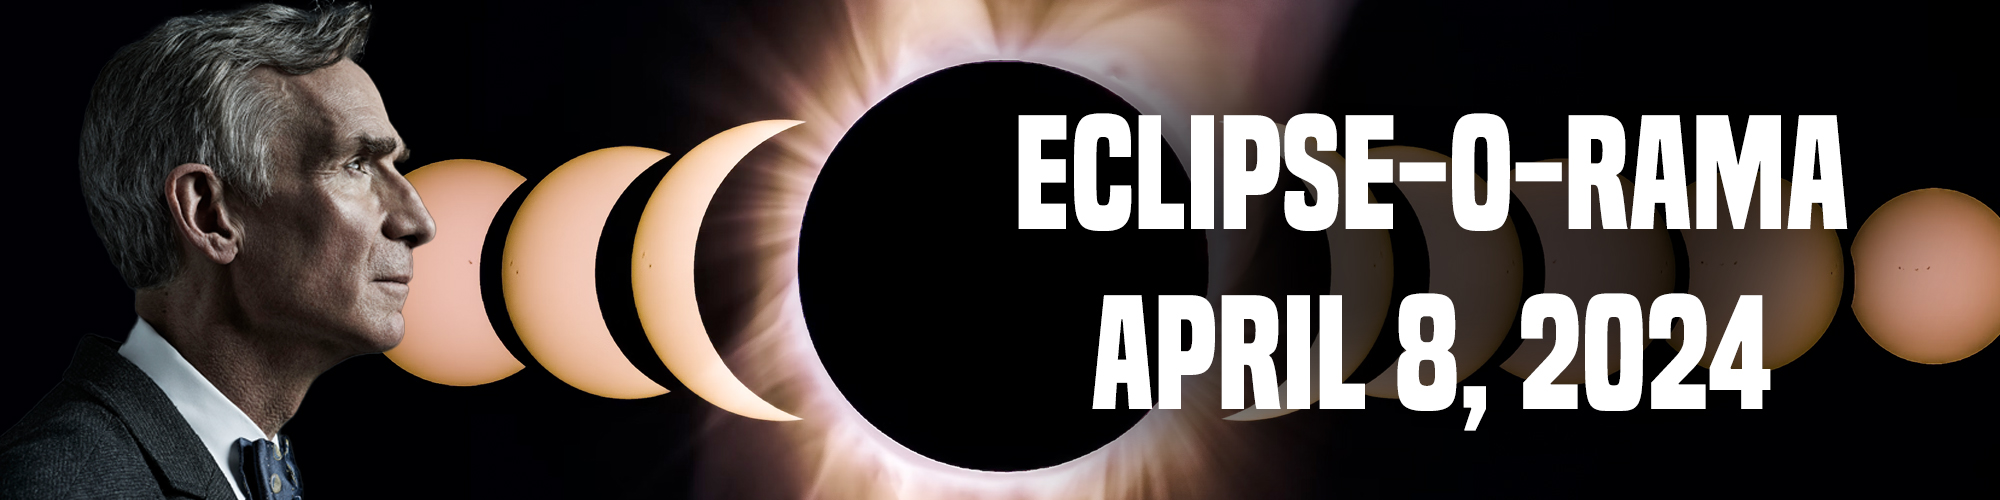 Planetary Society Solar Eclipse Event